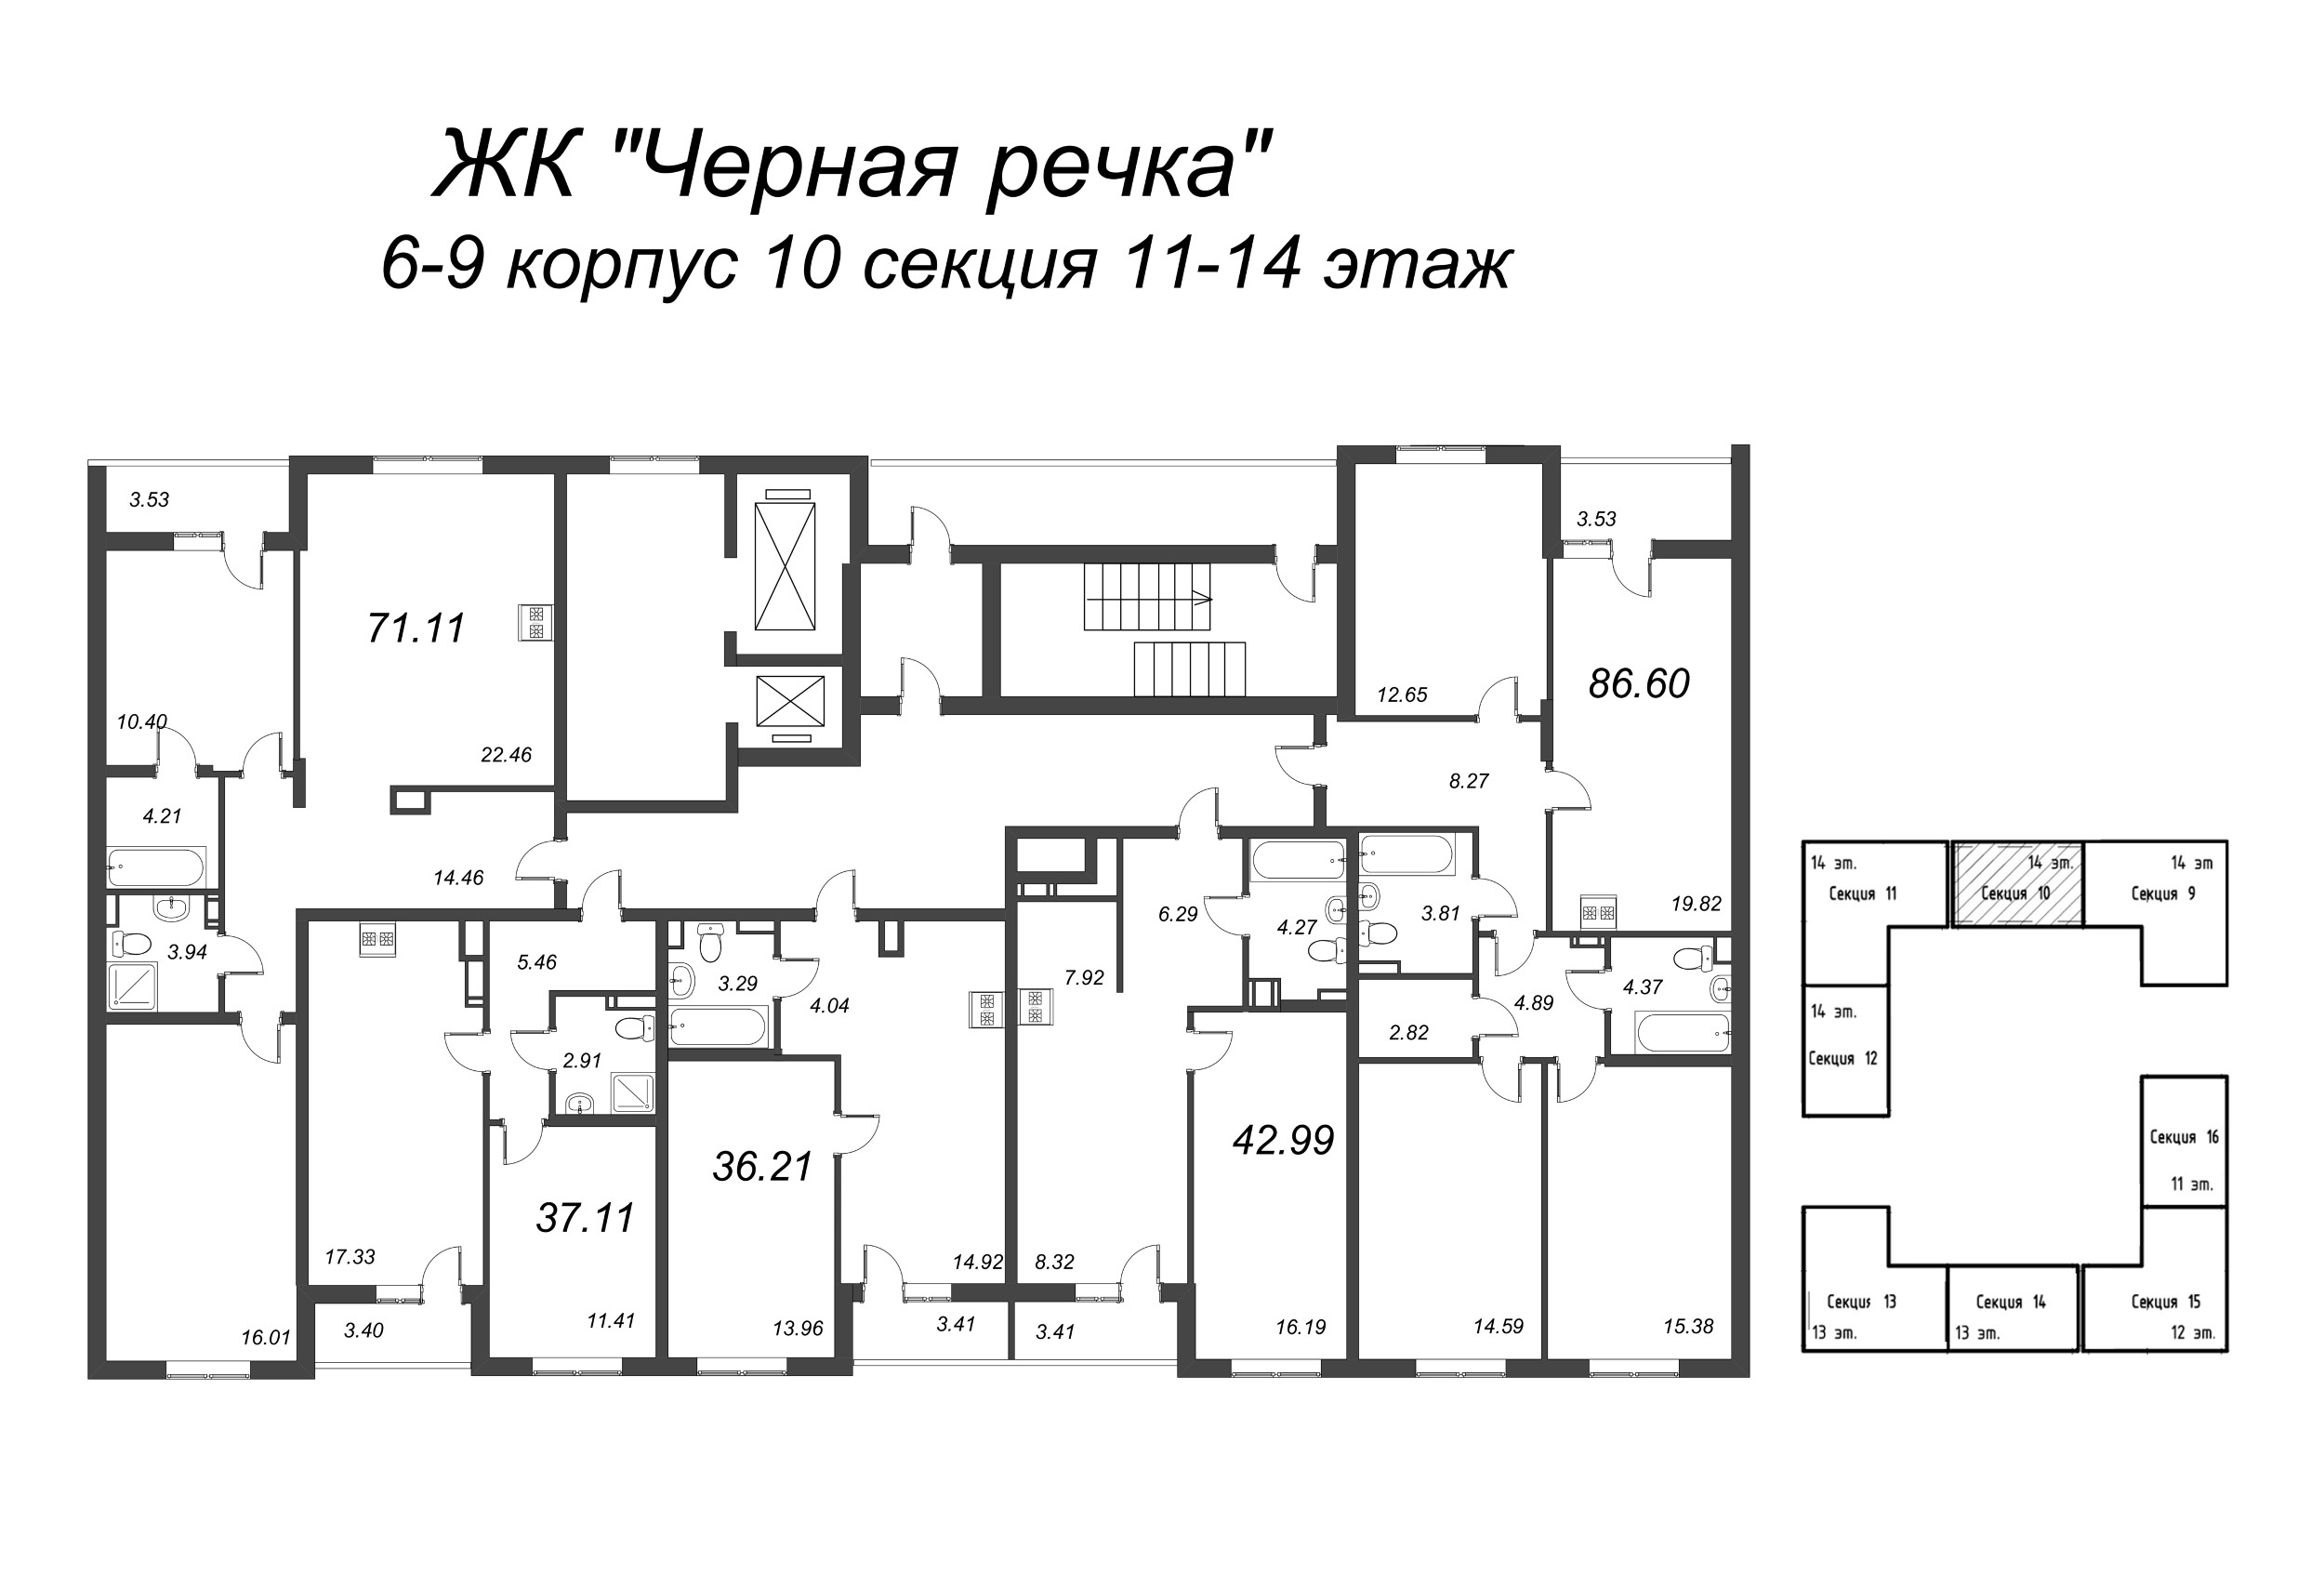 2-комнатная (Евро) квартира, 32.69 м² - планировка этажа